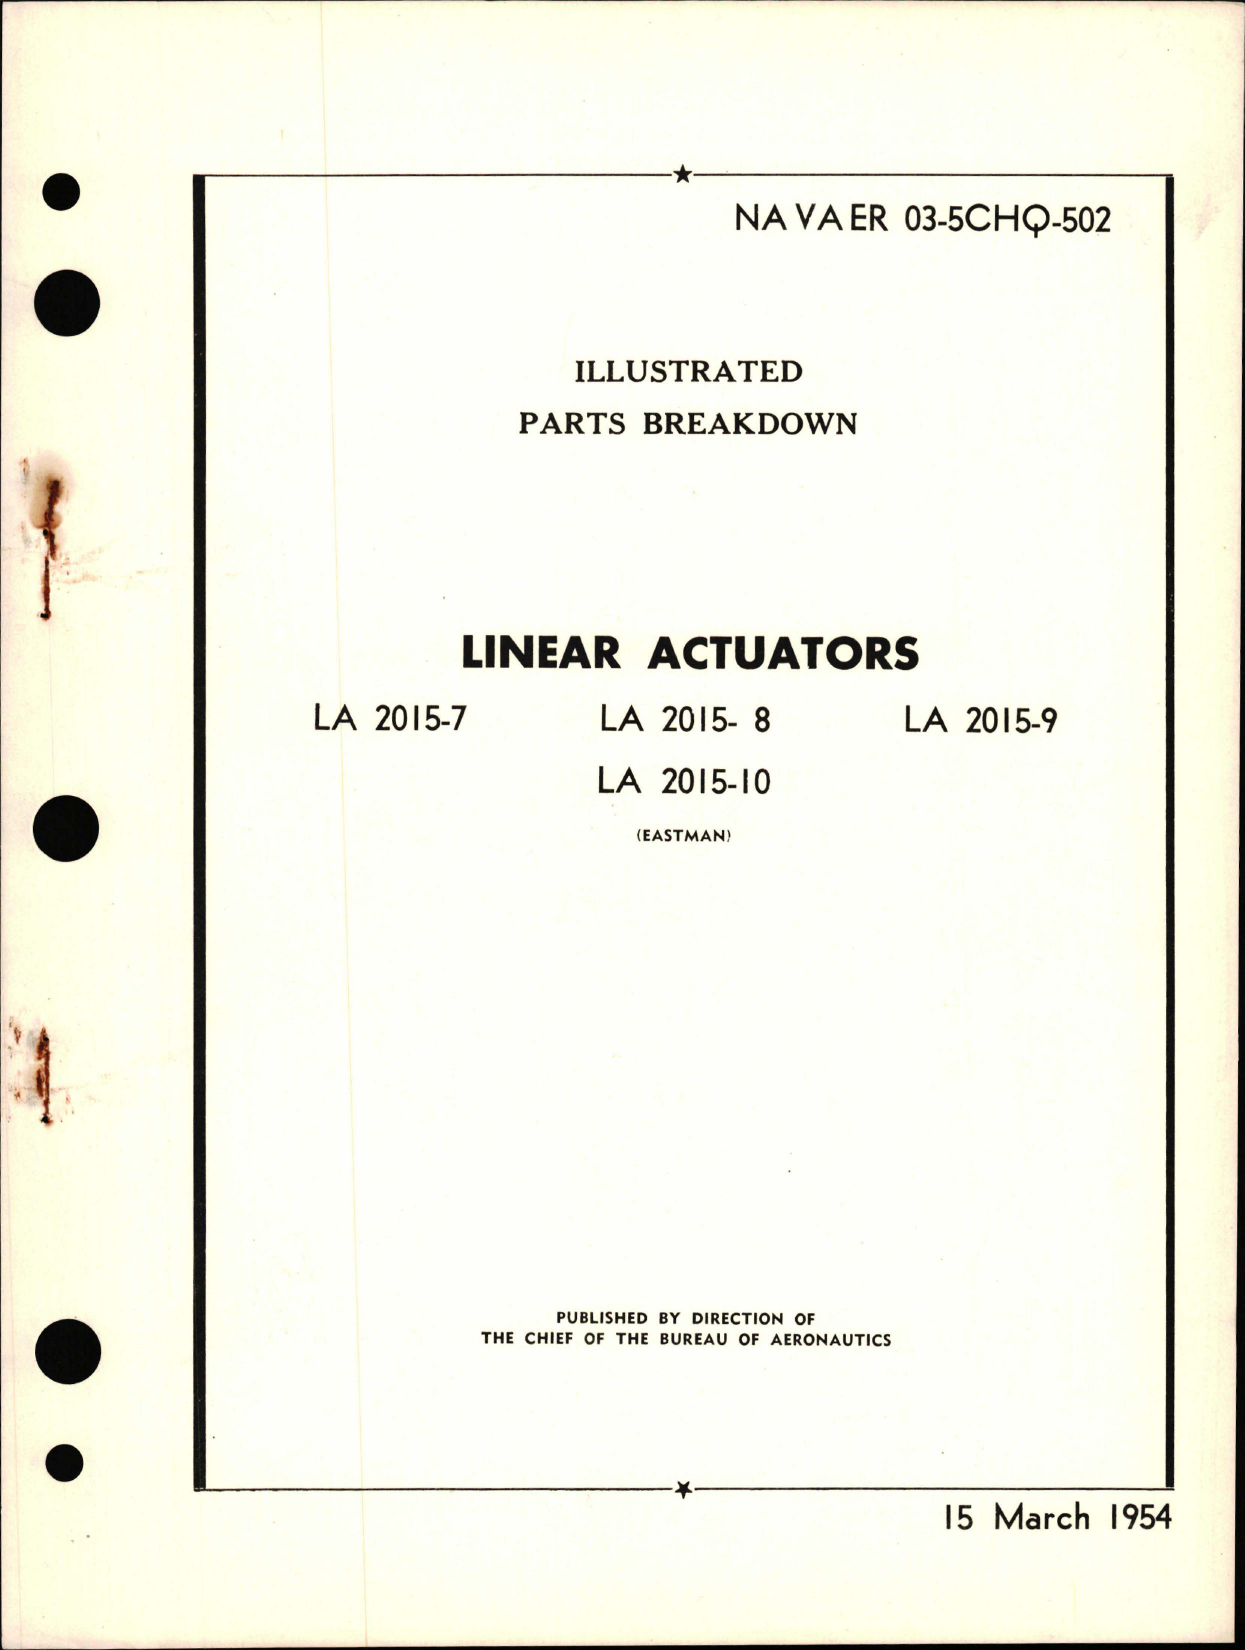 Sample page 1 from AirCorps Library document: Illustrated Parts Breakdown for Linear Actuators LA 2015-7, LA 2015-8, LA 2015-9, and LA 2015-10